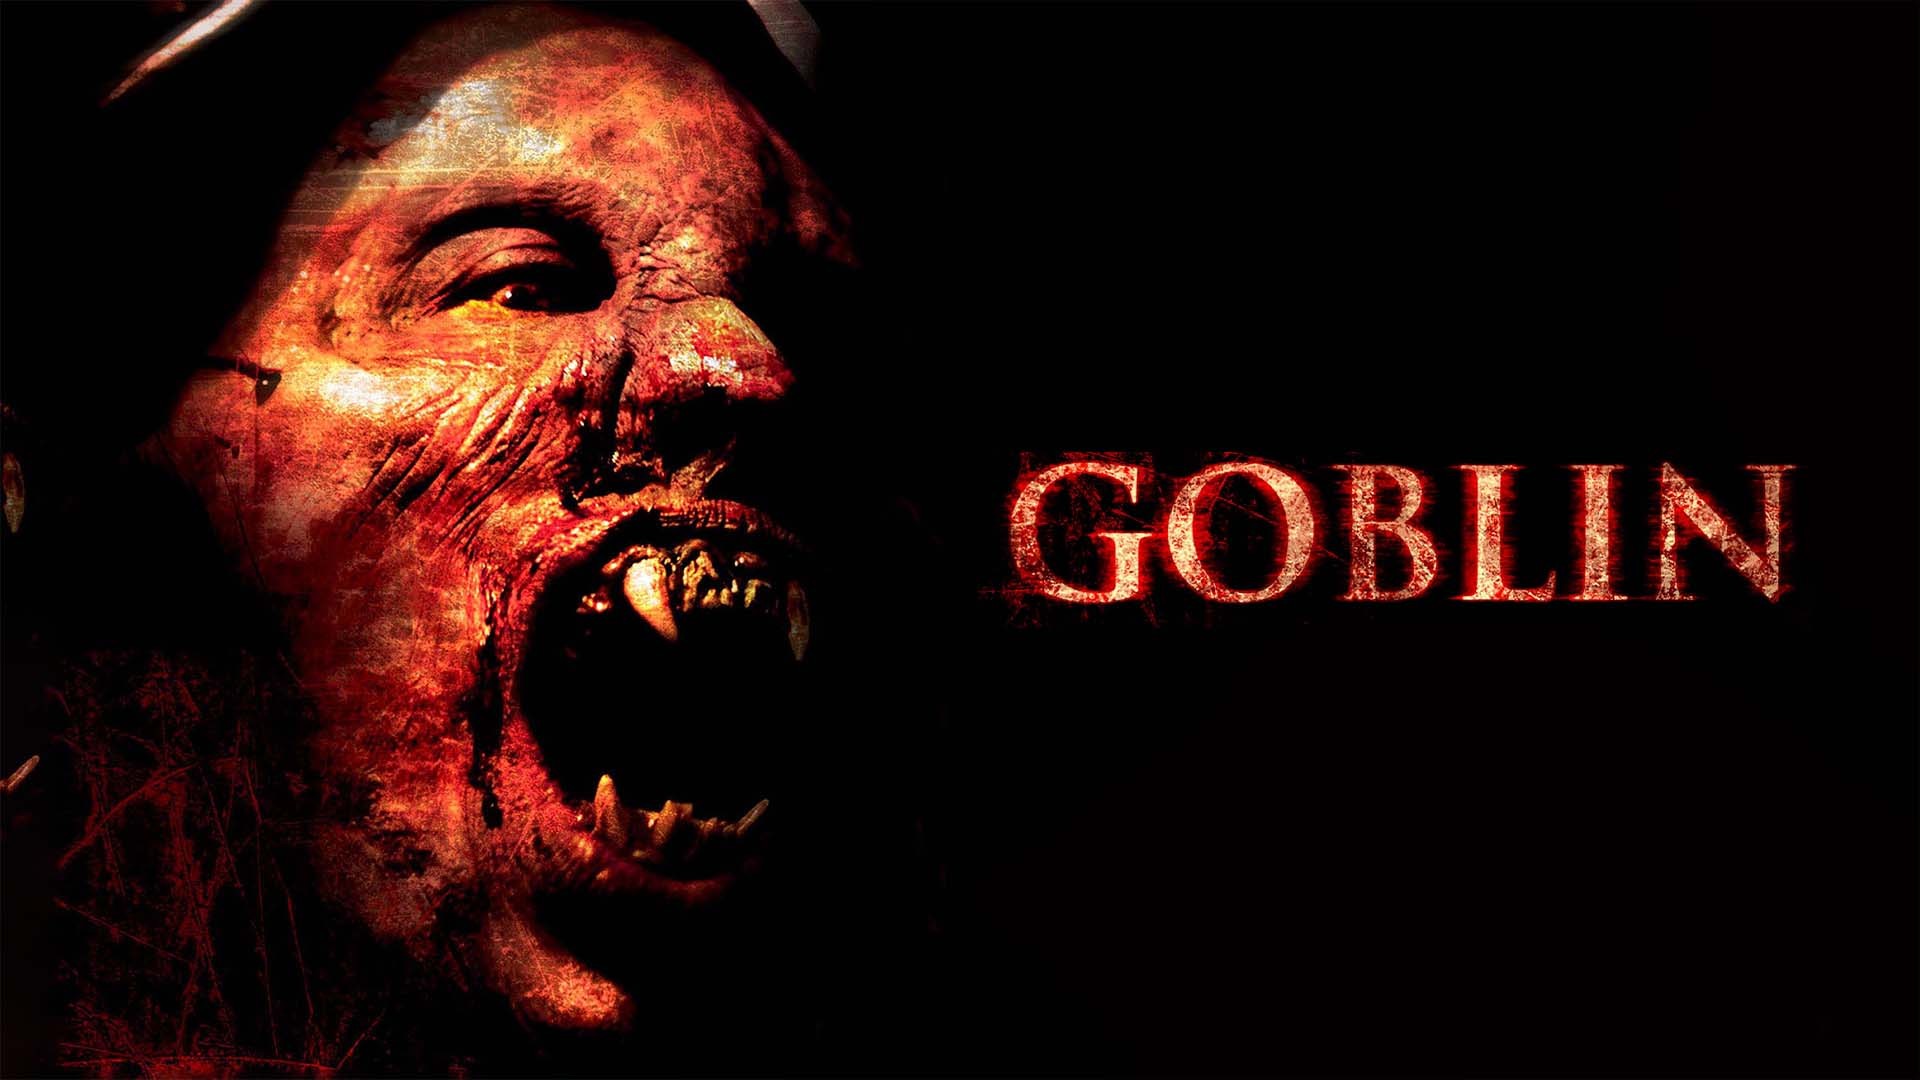 Goblin Slayer - Rotten Tomatoes